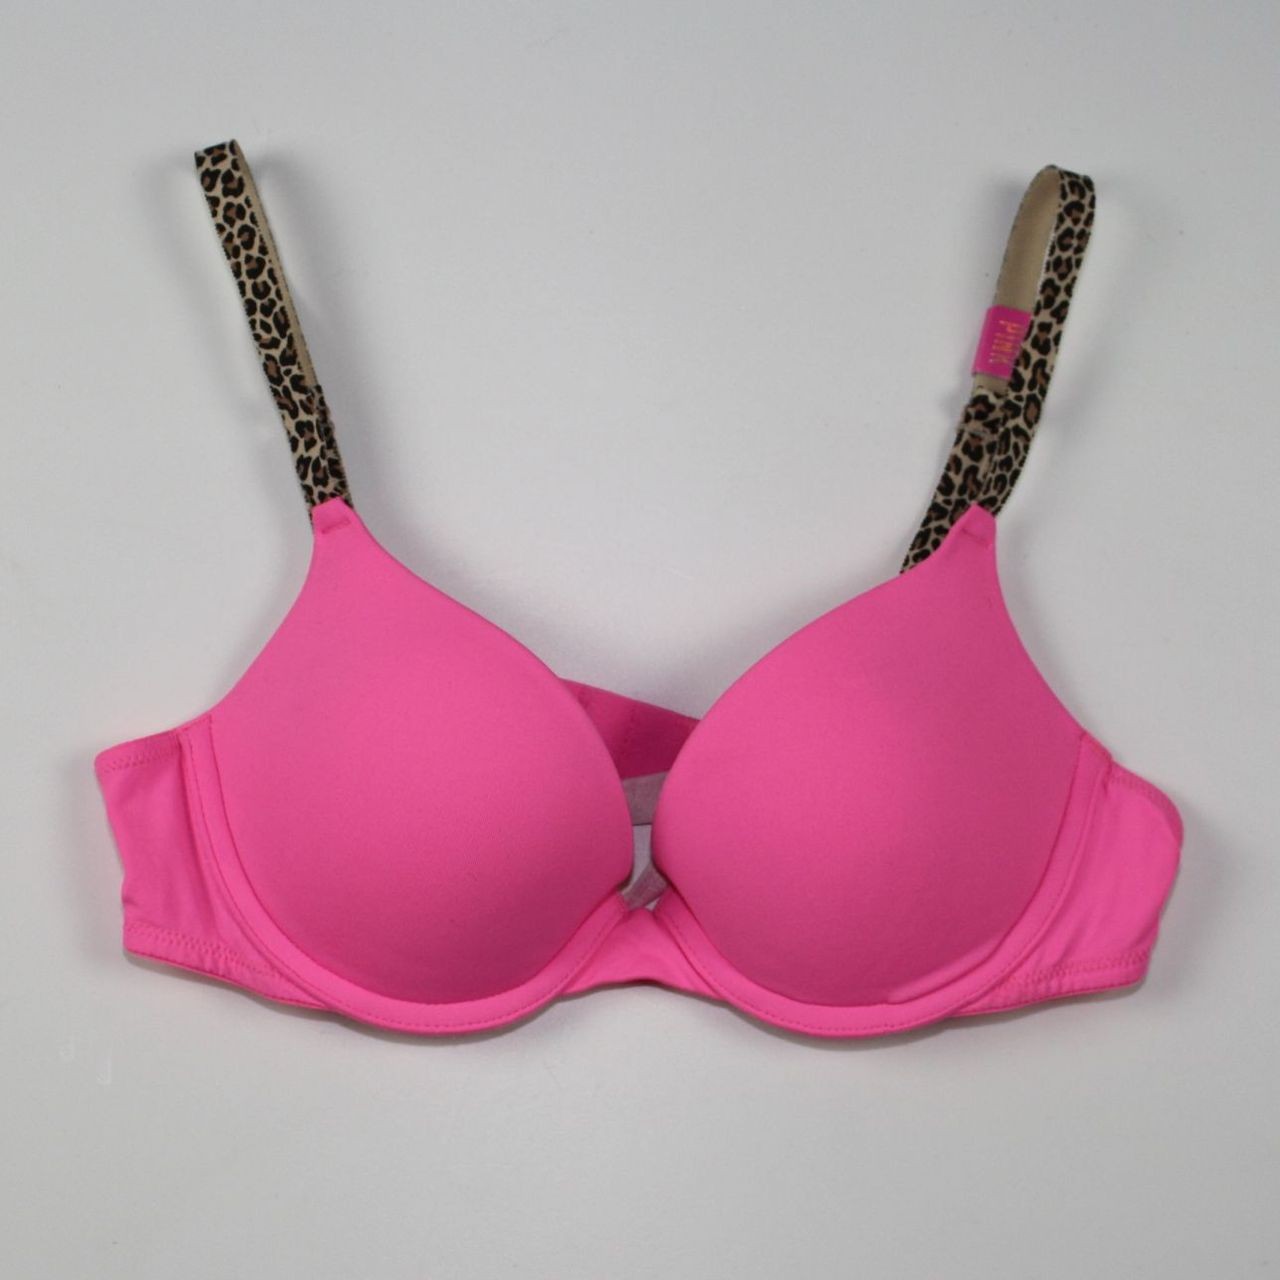 http://vintaya.com/1077/victoria-s-secret-pink-push-up-bra-size-34a.jpg